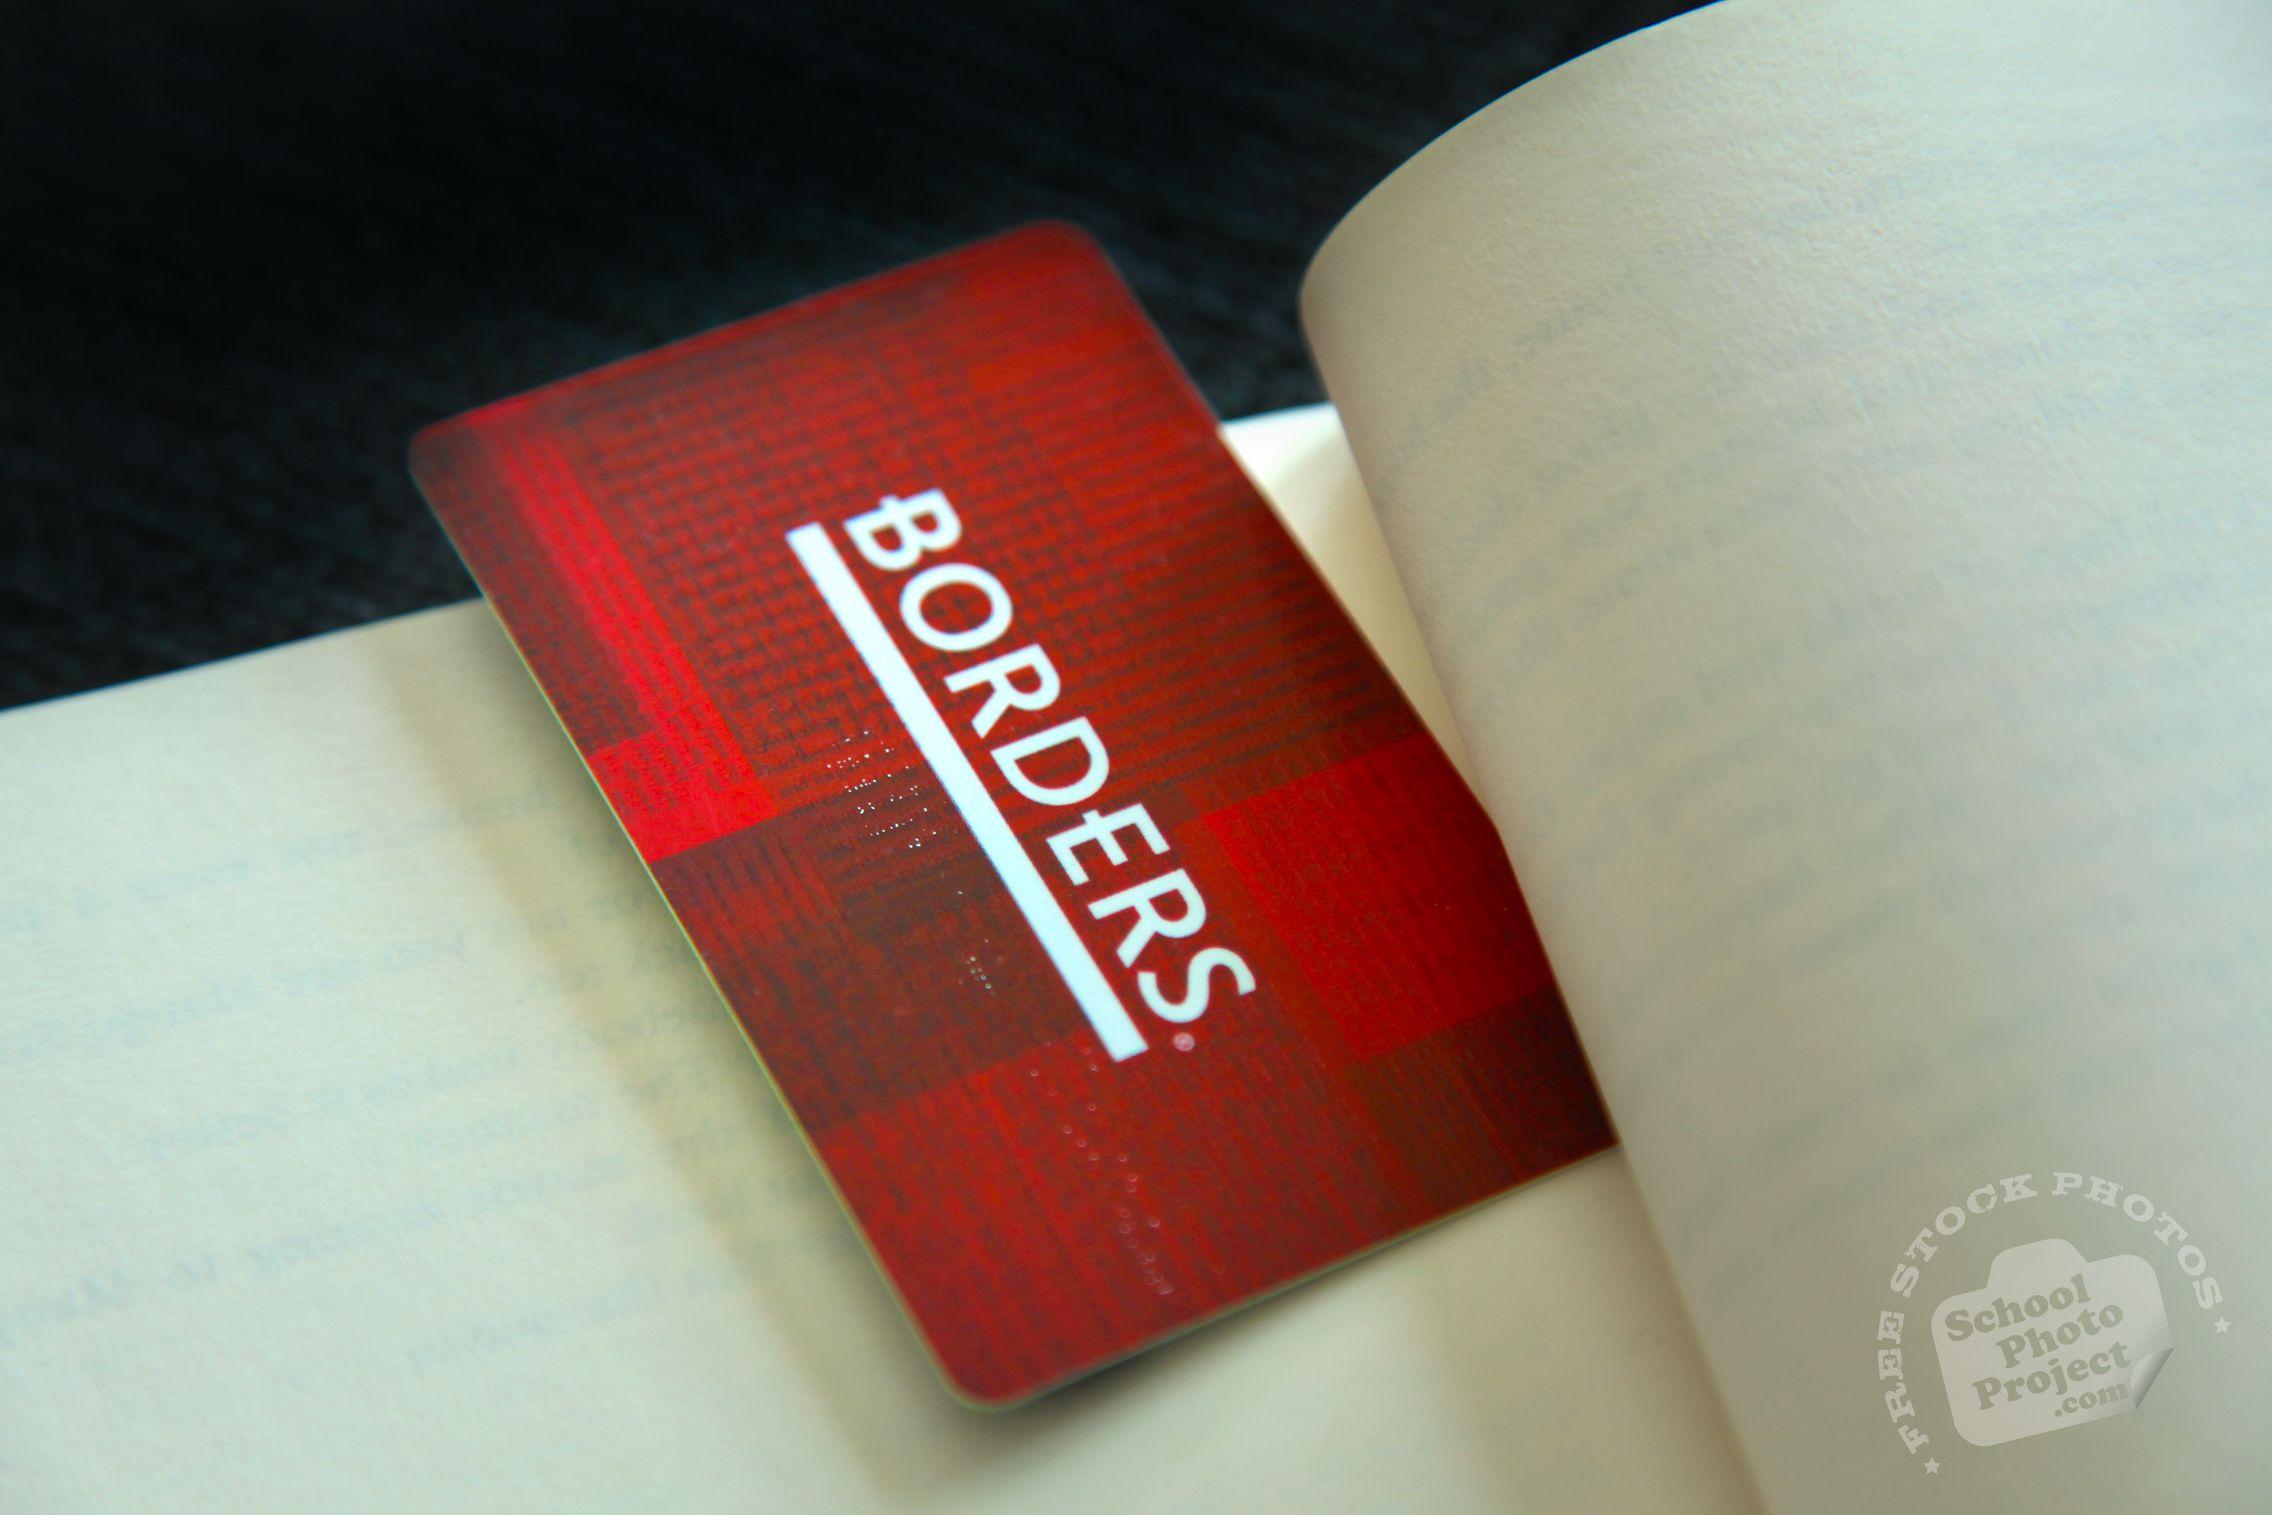 Borders Bookstore Logo - Borders Logo, FREE , Image, Picture: Borders Logo on Gift